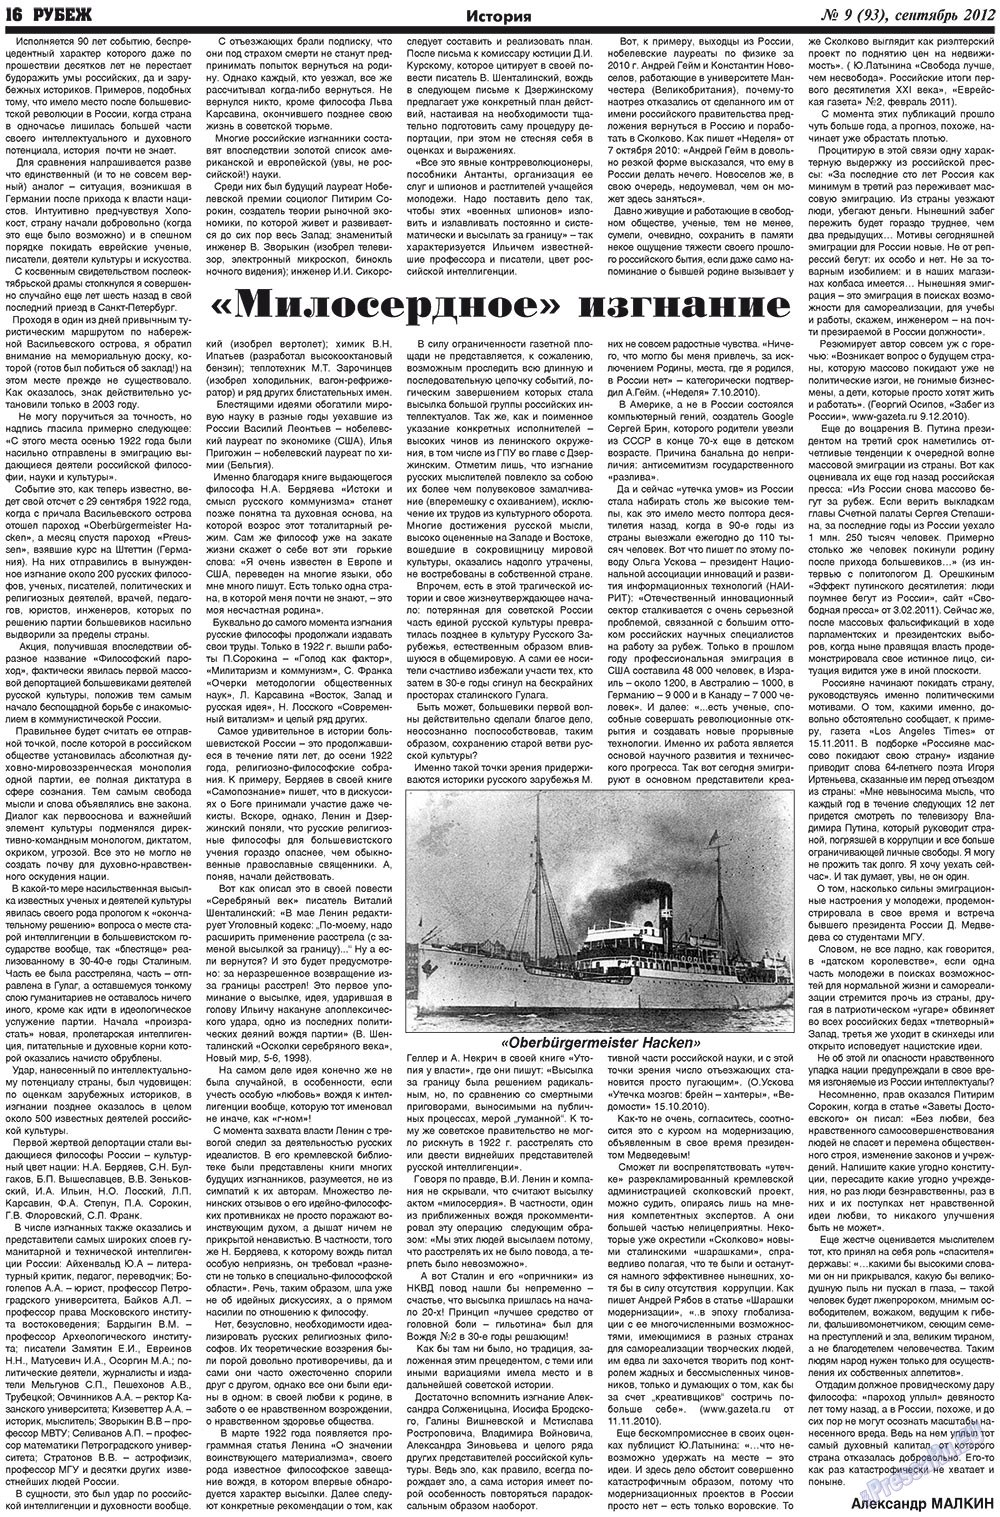 Рубеж, газета. 2012 №9 стр.16